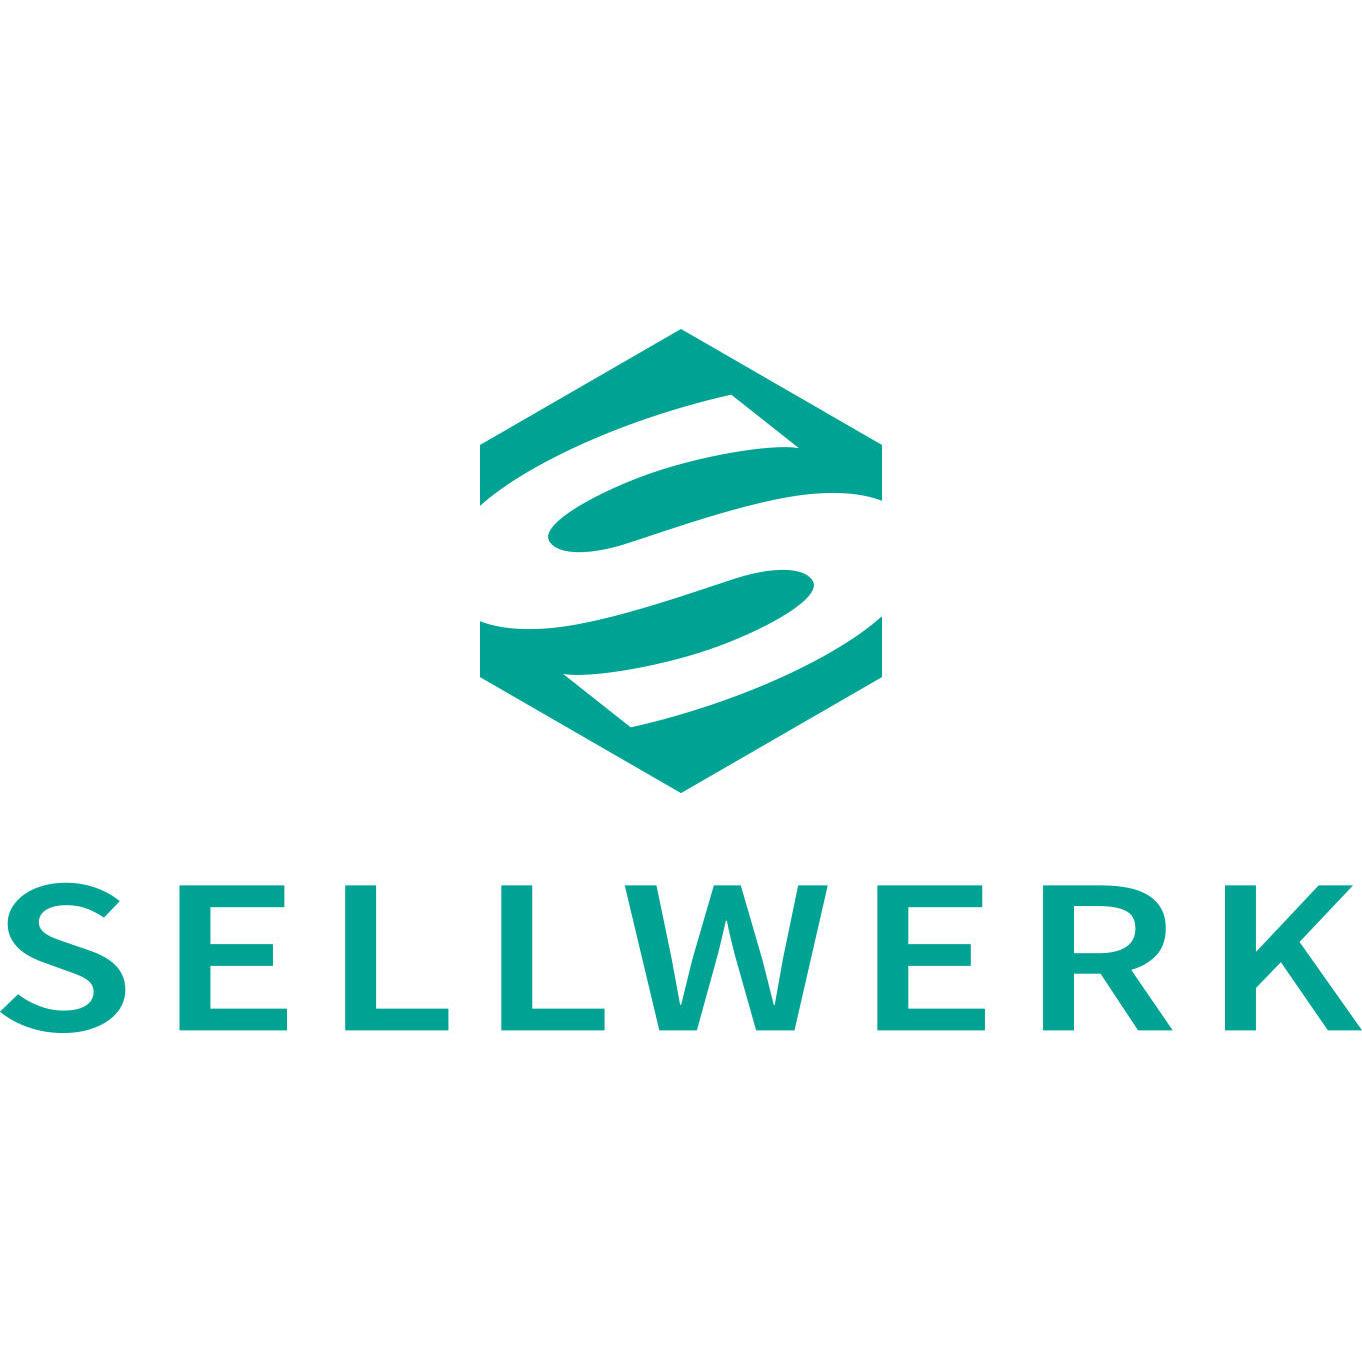 SELLWERK - Dresden, Sachsen Logo